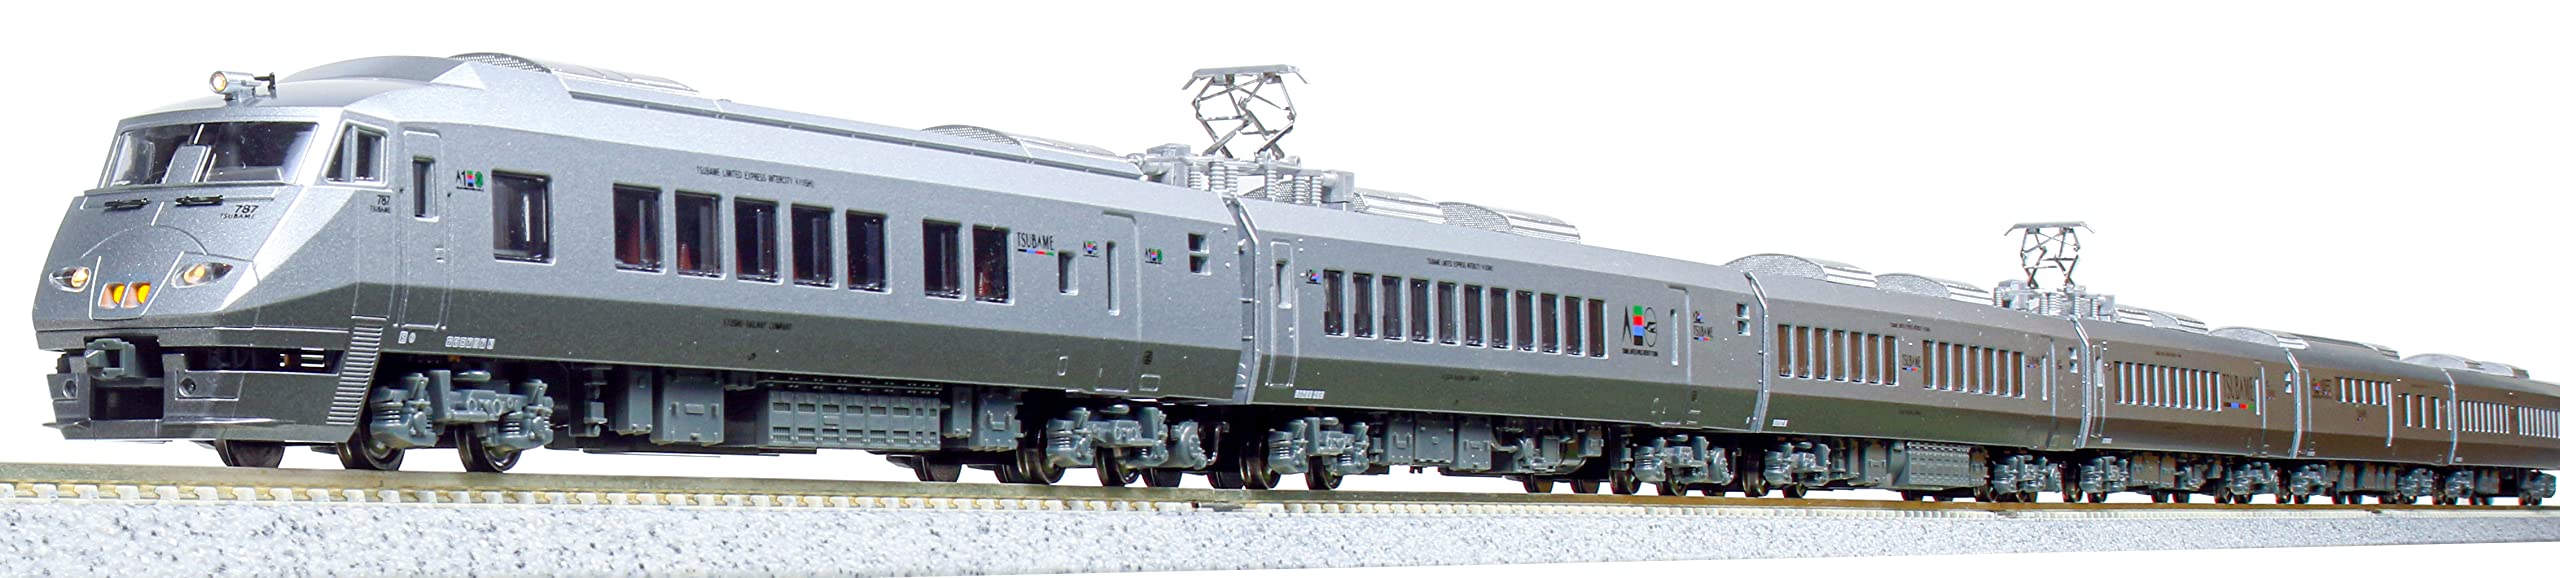 Kato N Gauge 787 Series 9-Car Tsubame Silver Model Train Set 10-1615